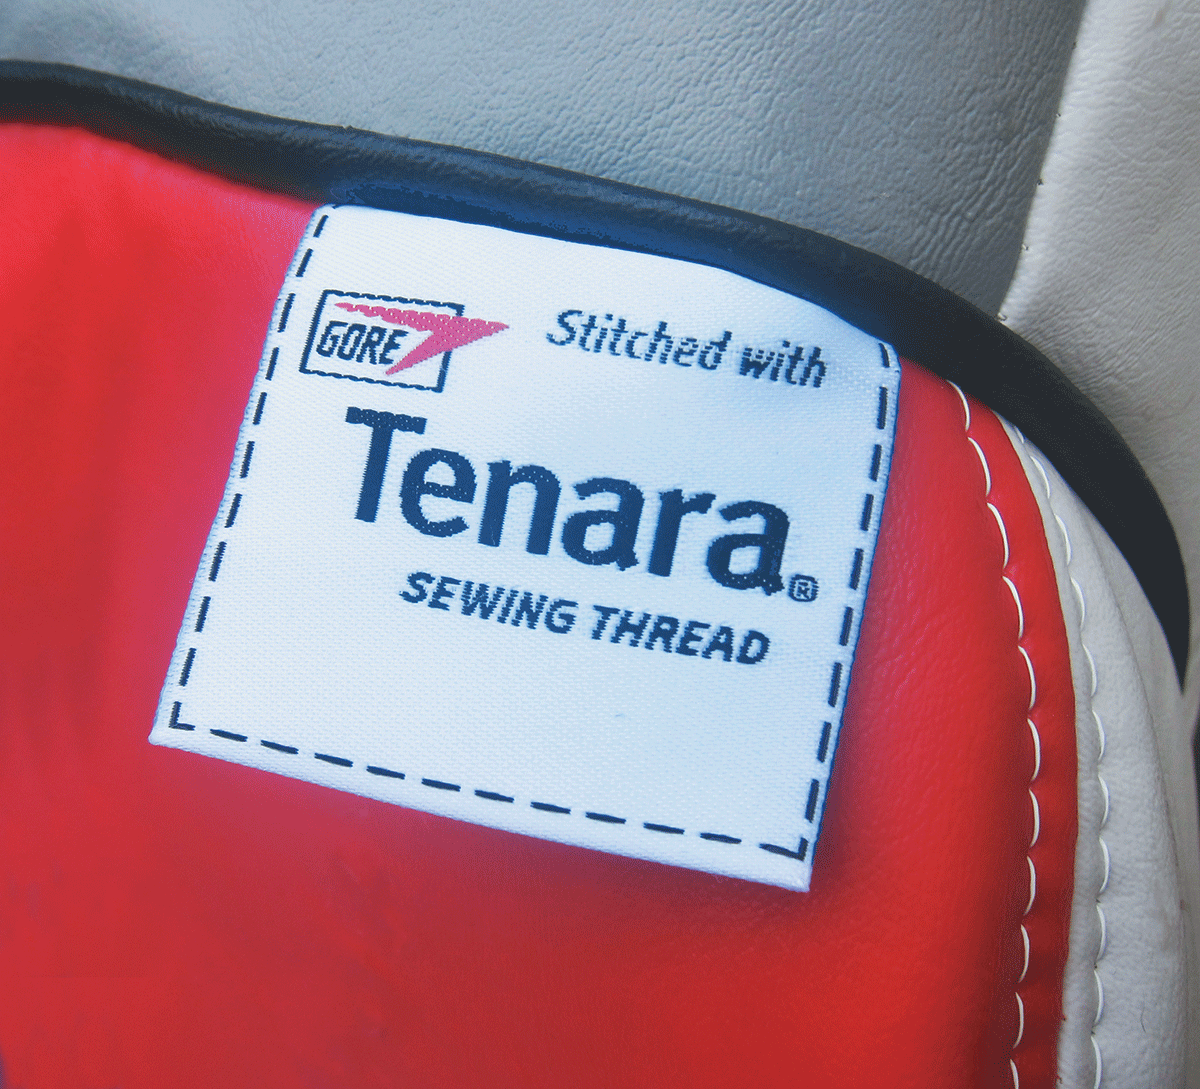 A logo of Tenara sewing thread